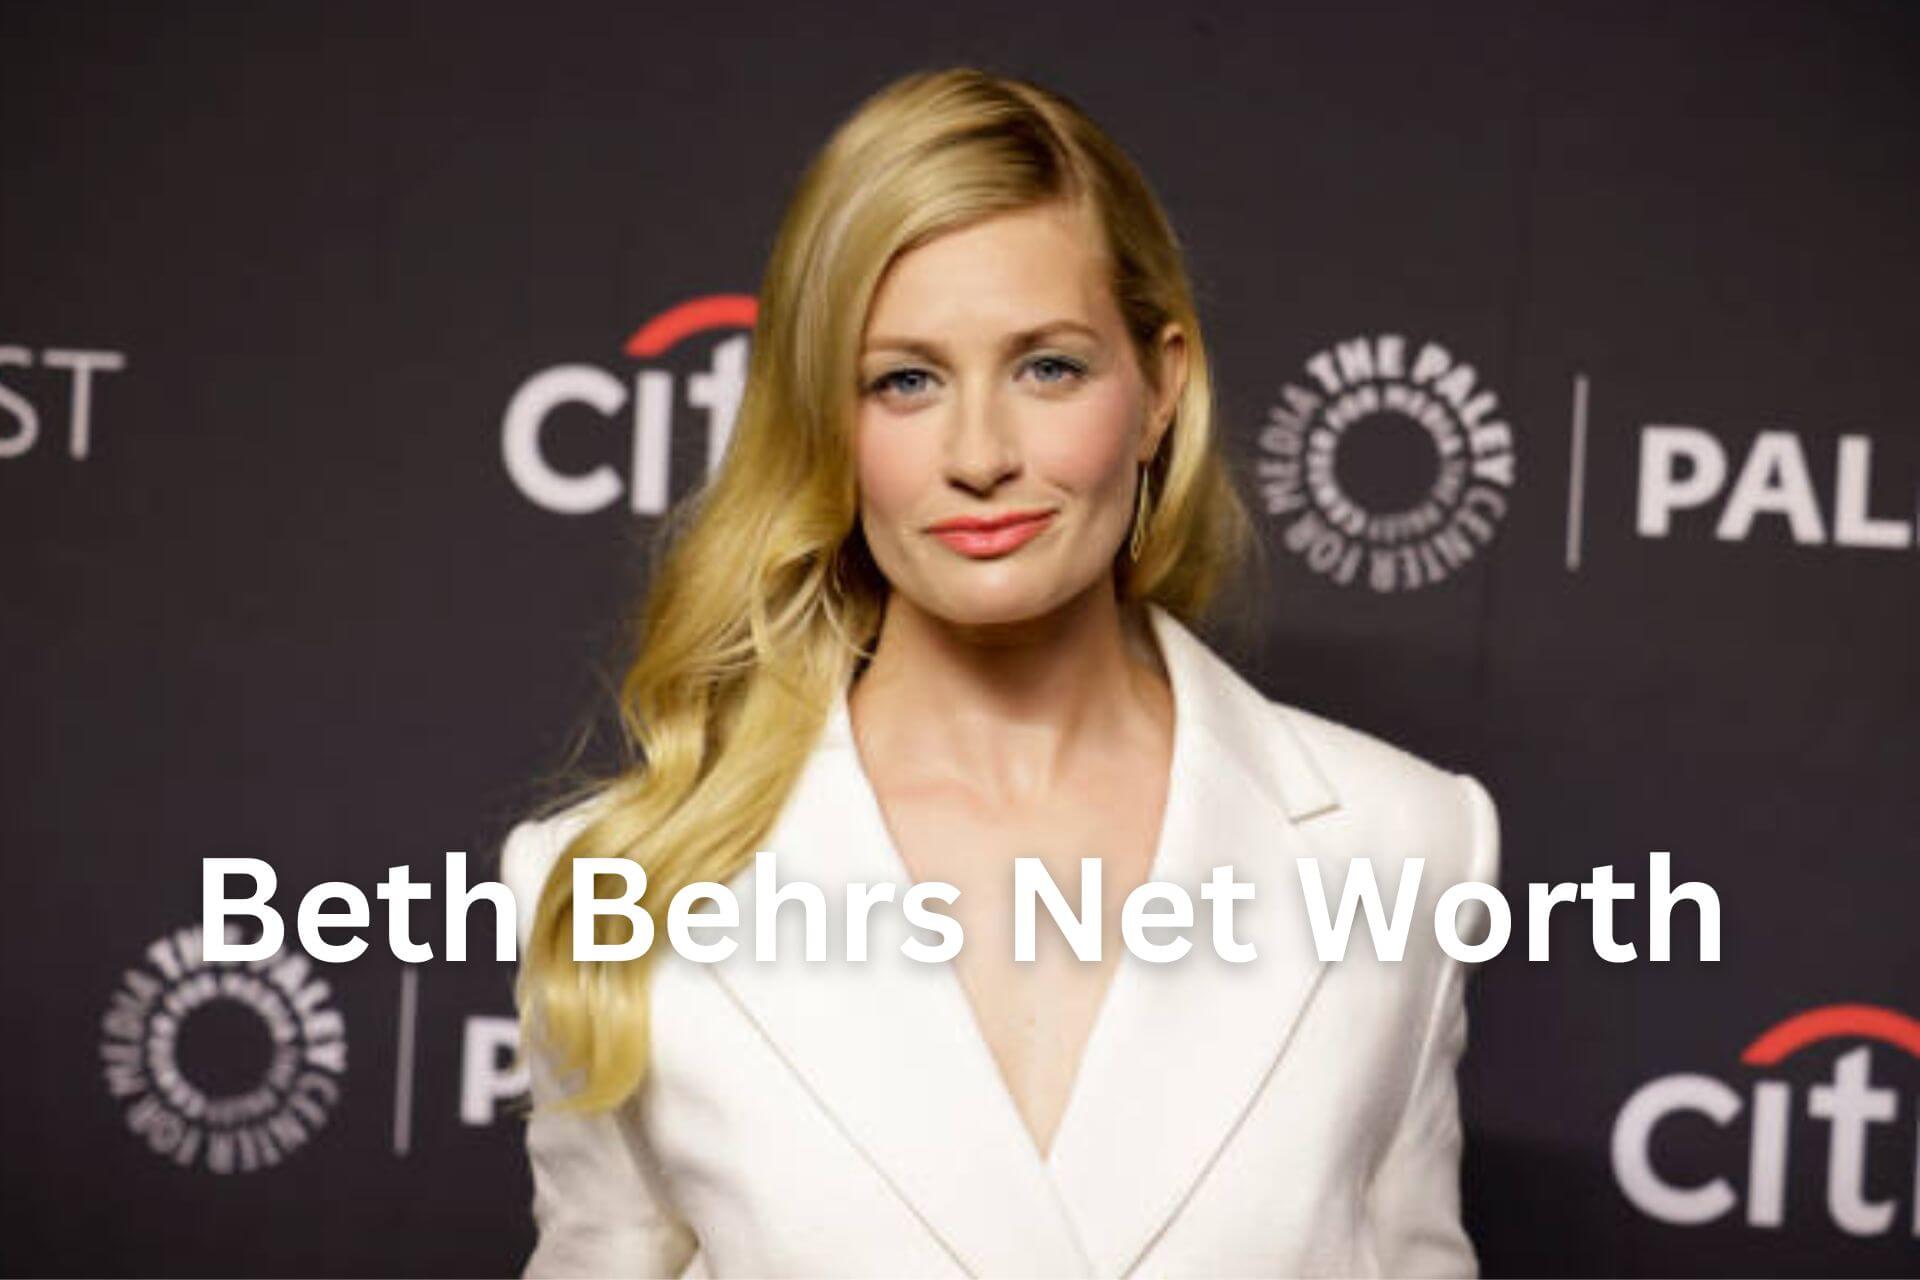 Beth Behrs Net worth